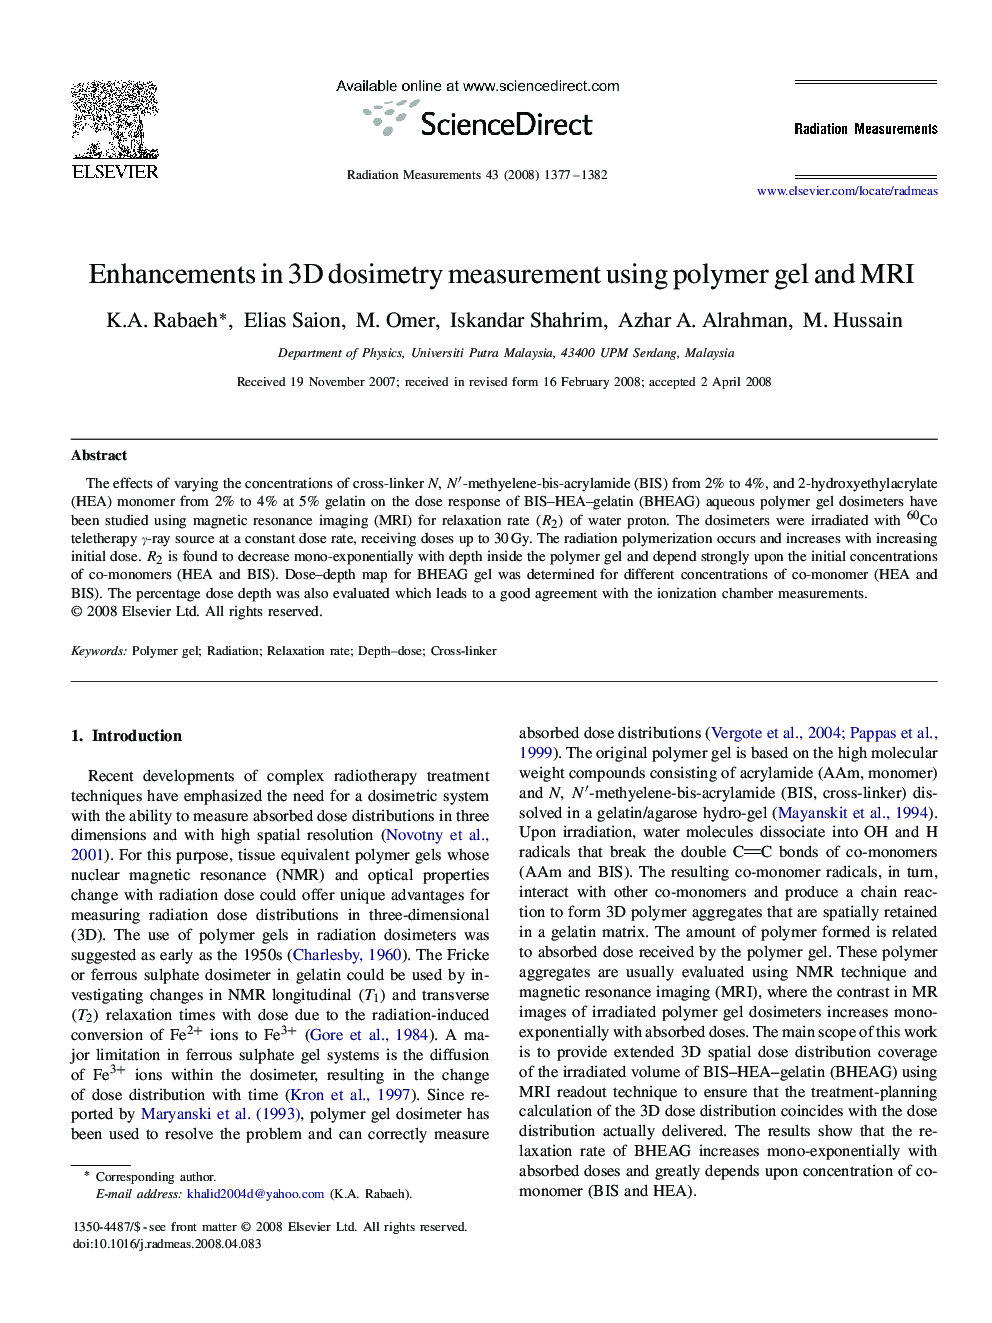 Enhancements in 3D dosimetry measurement using polymer gel and MRI